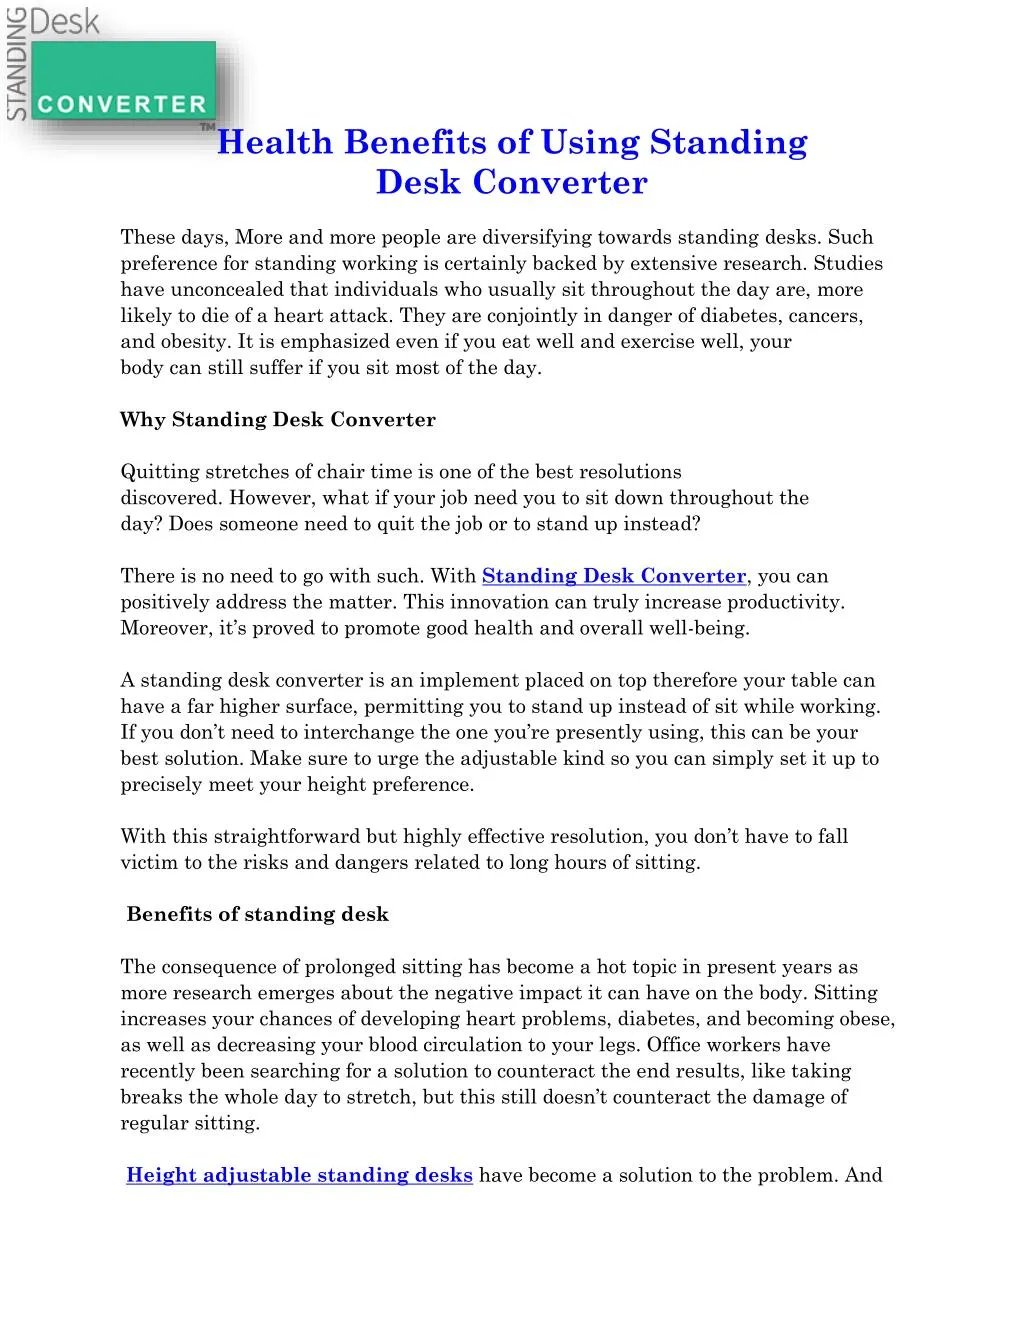 health benefits of using standing desk converter